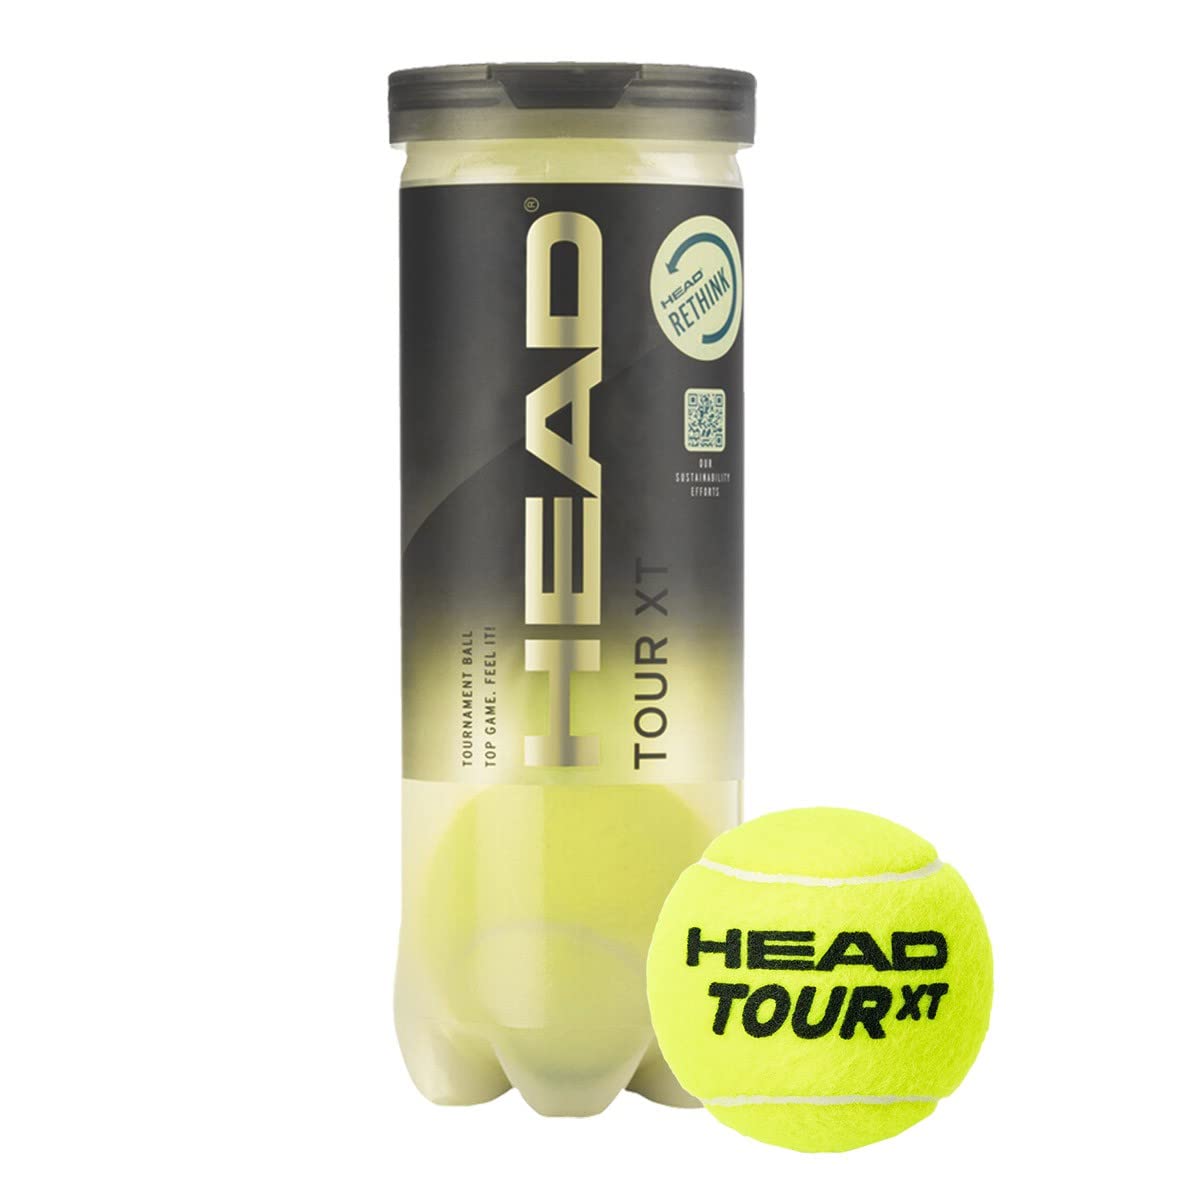 Head Tour XT Tennis Balls Dozen (4 Cans) - Best Price online Prokicksports.com